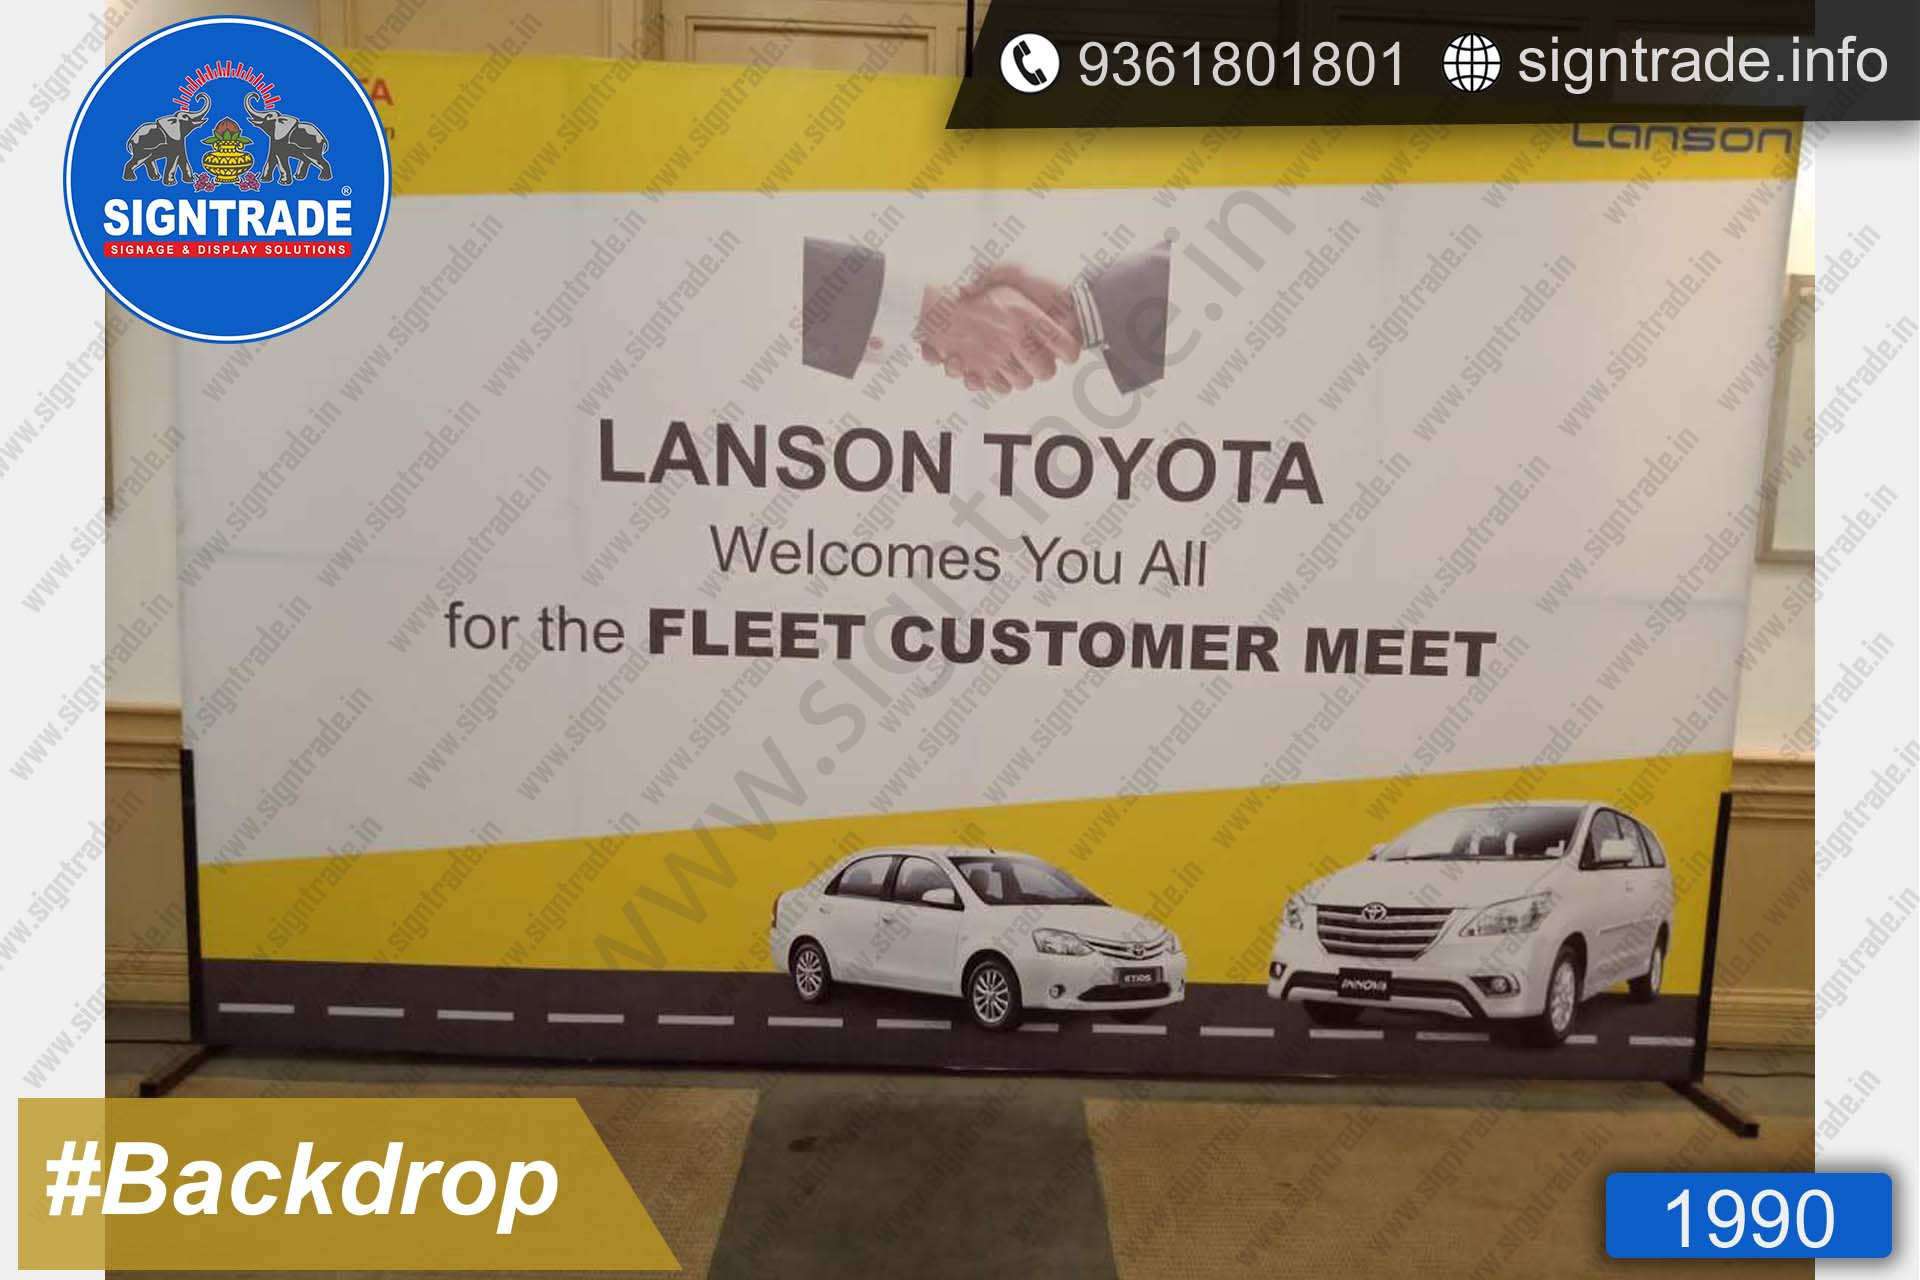 Lanson Toyota Backdrop display